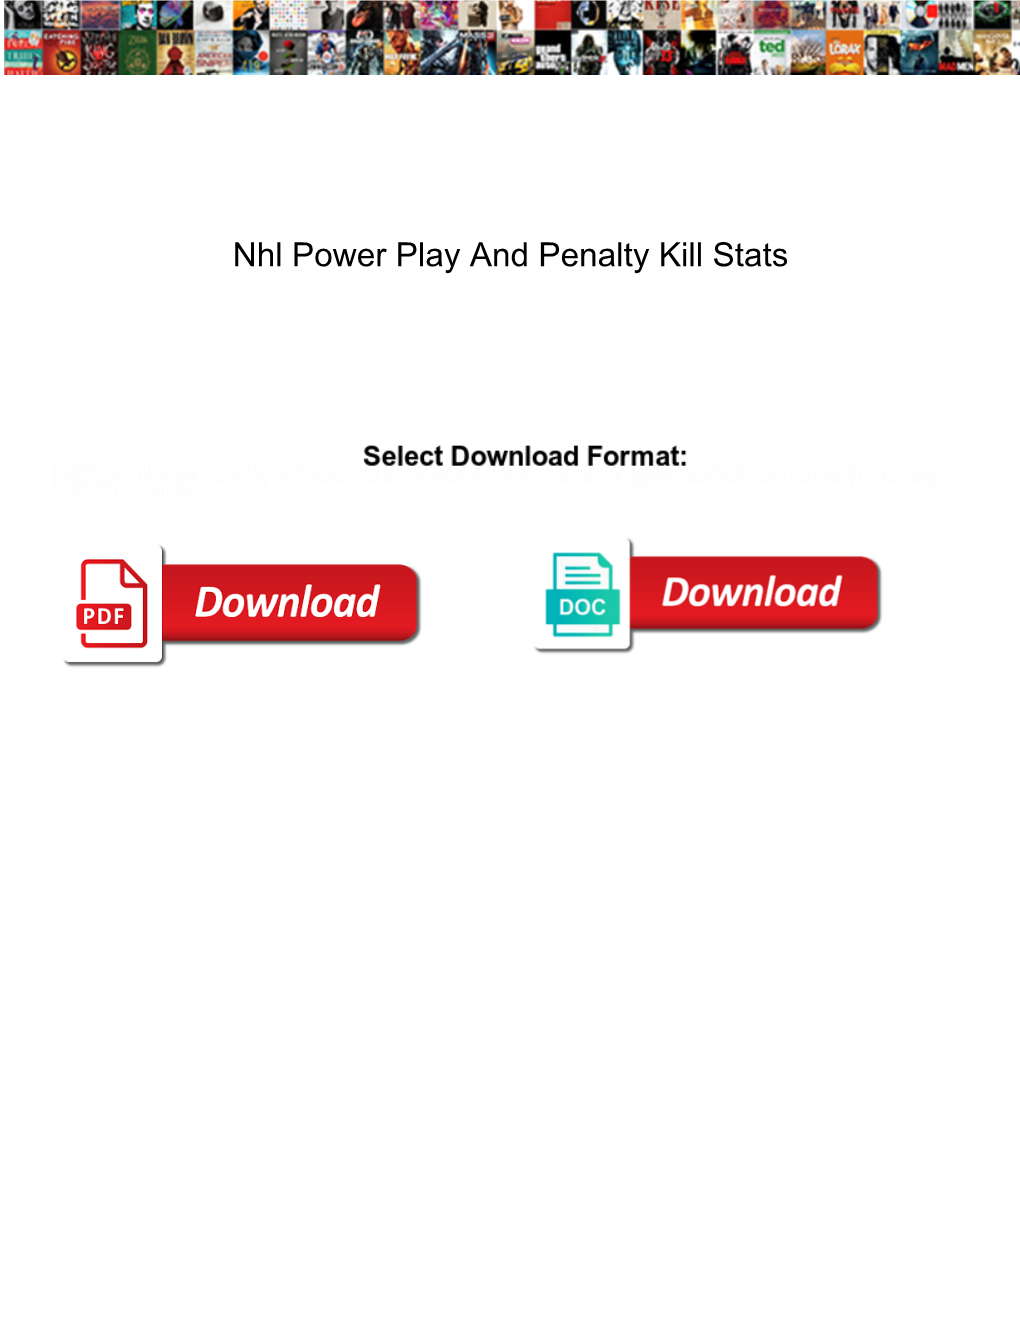 Nhl Power Play and Penalty Kill Stats